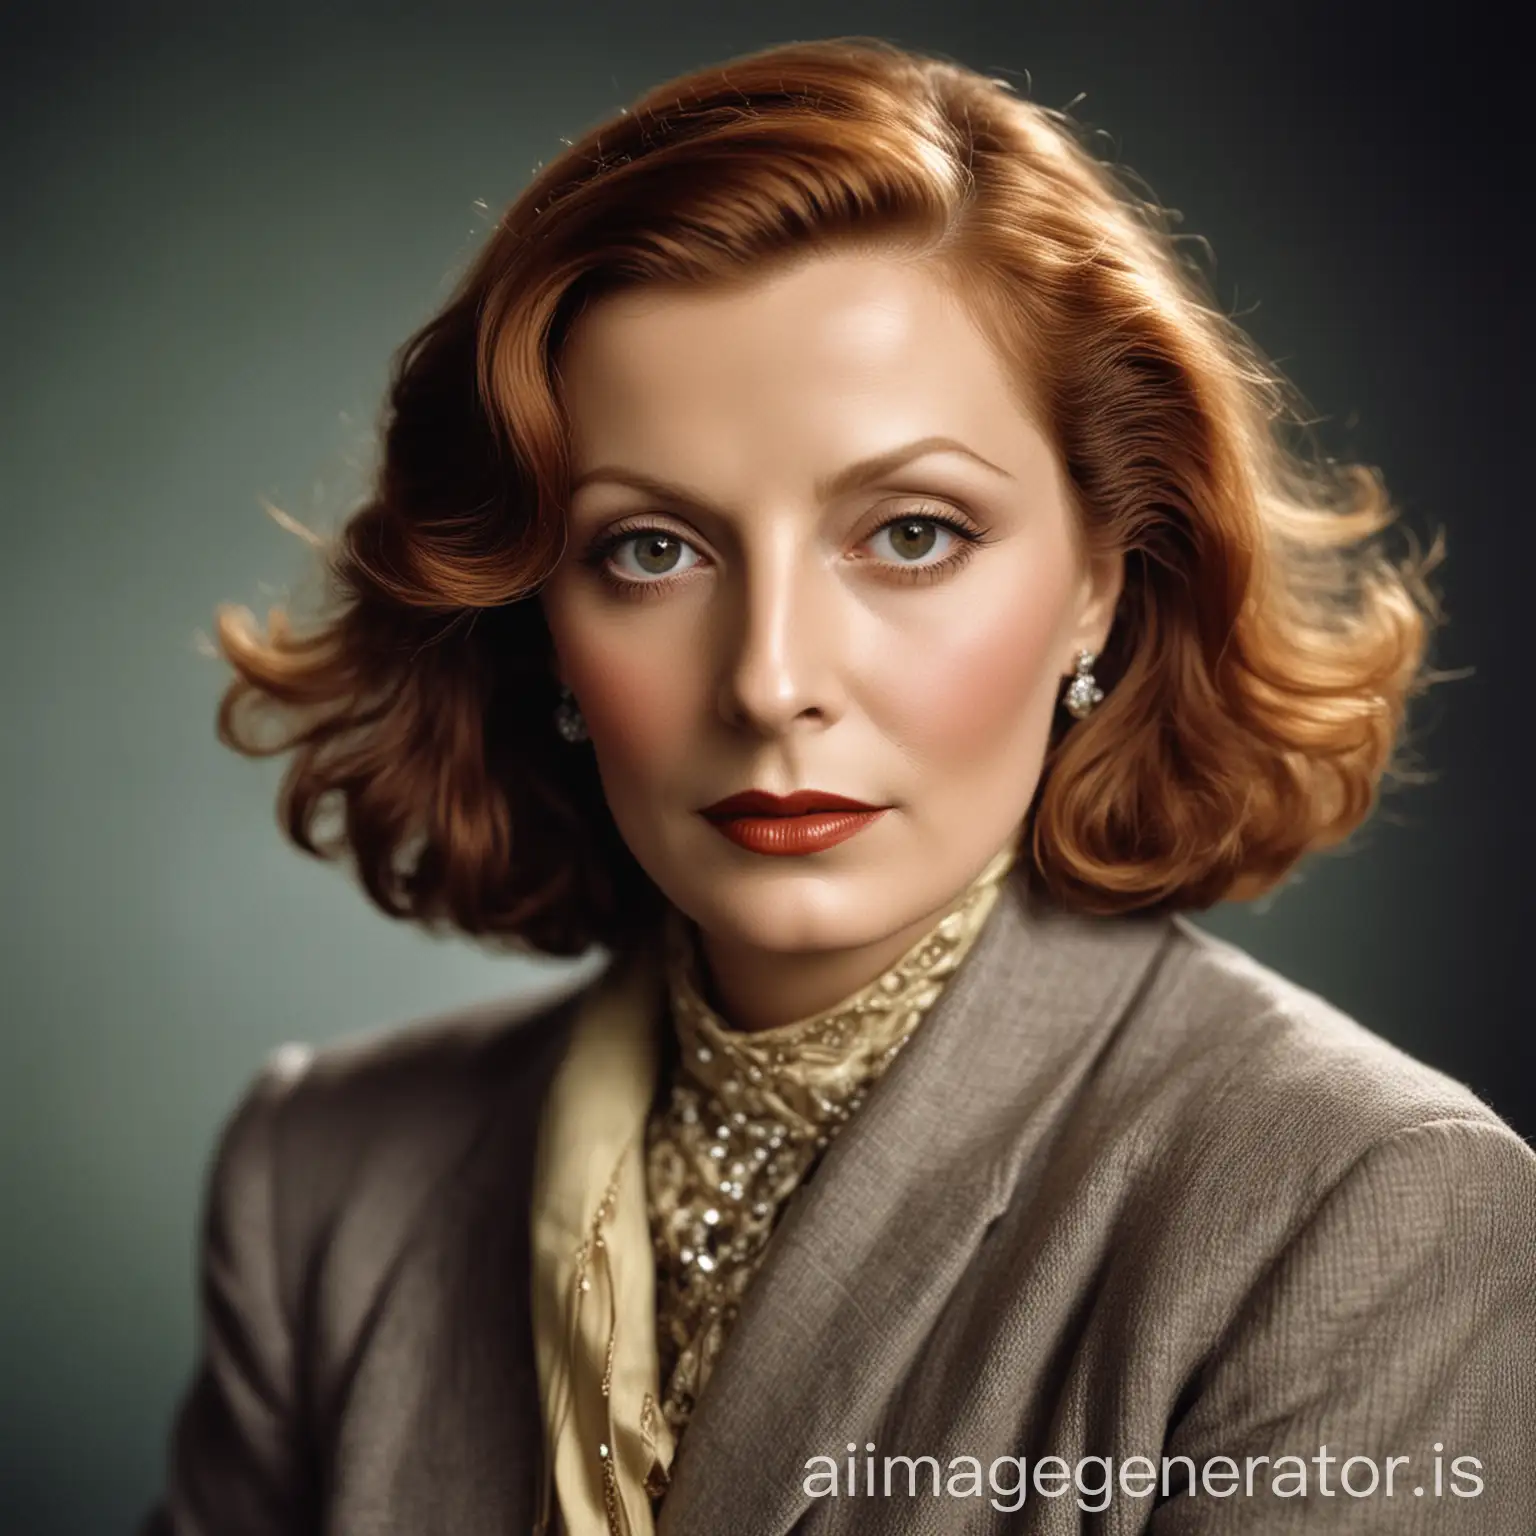 Greta Garbo in realistic color photography